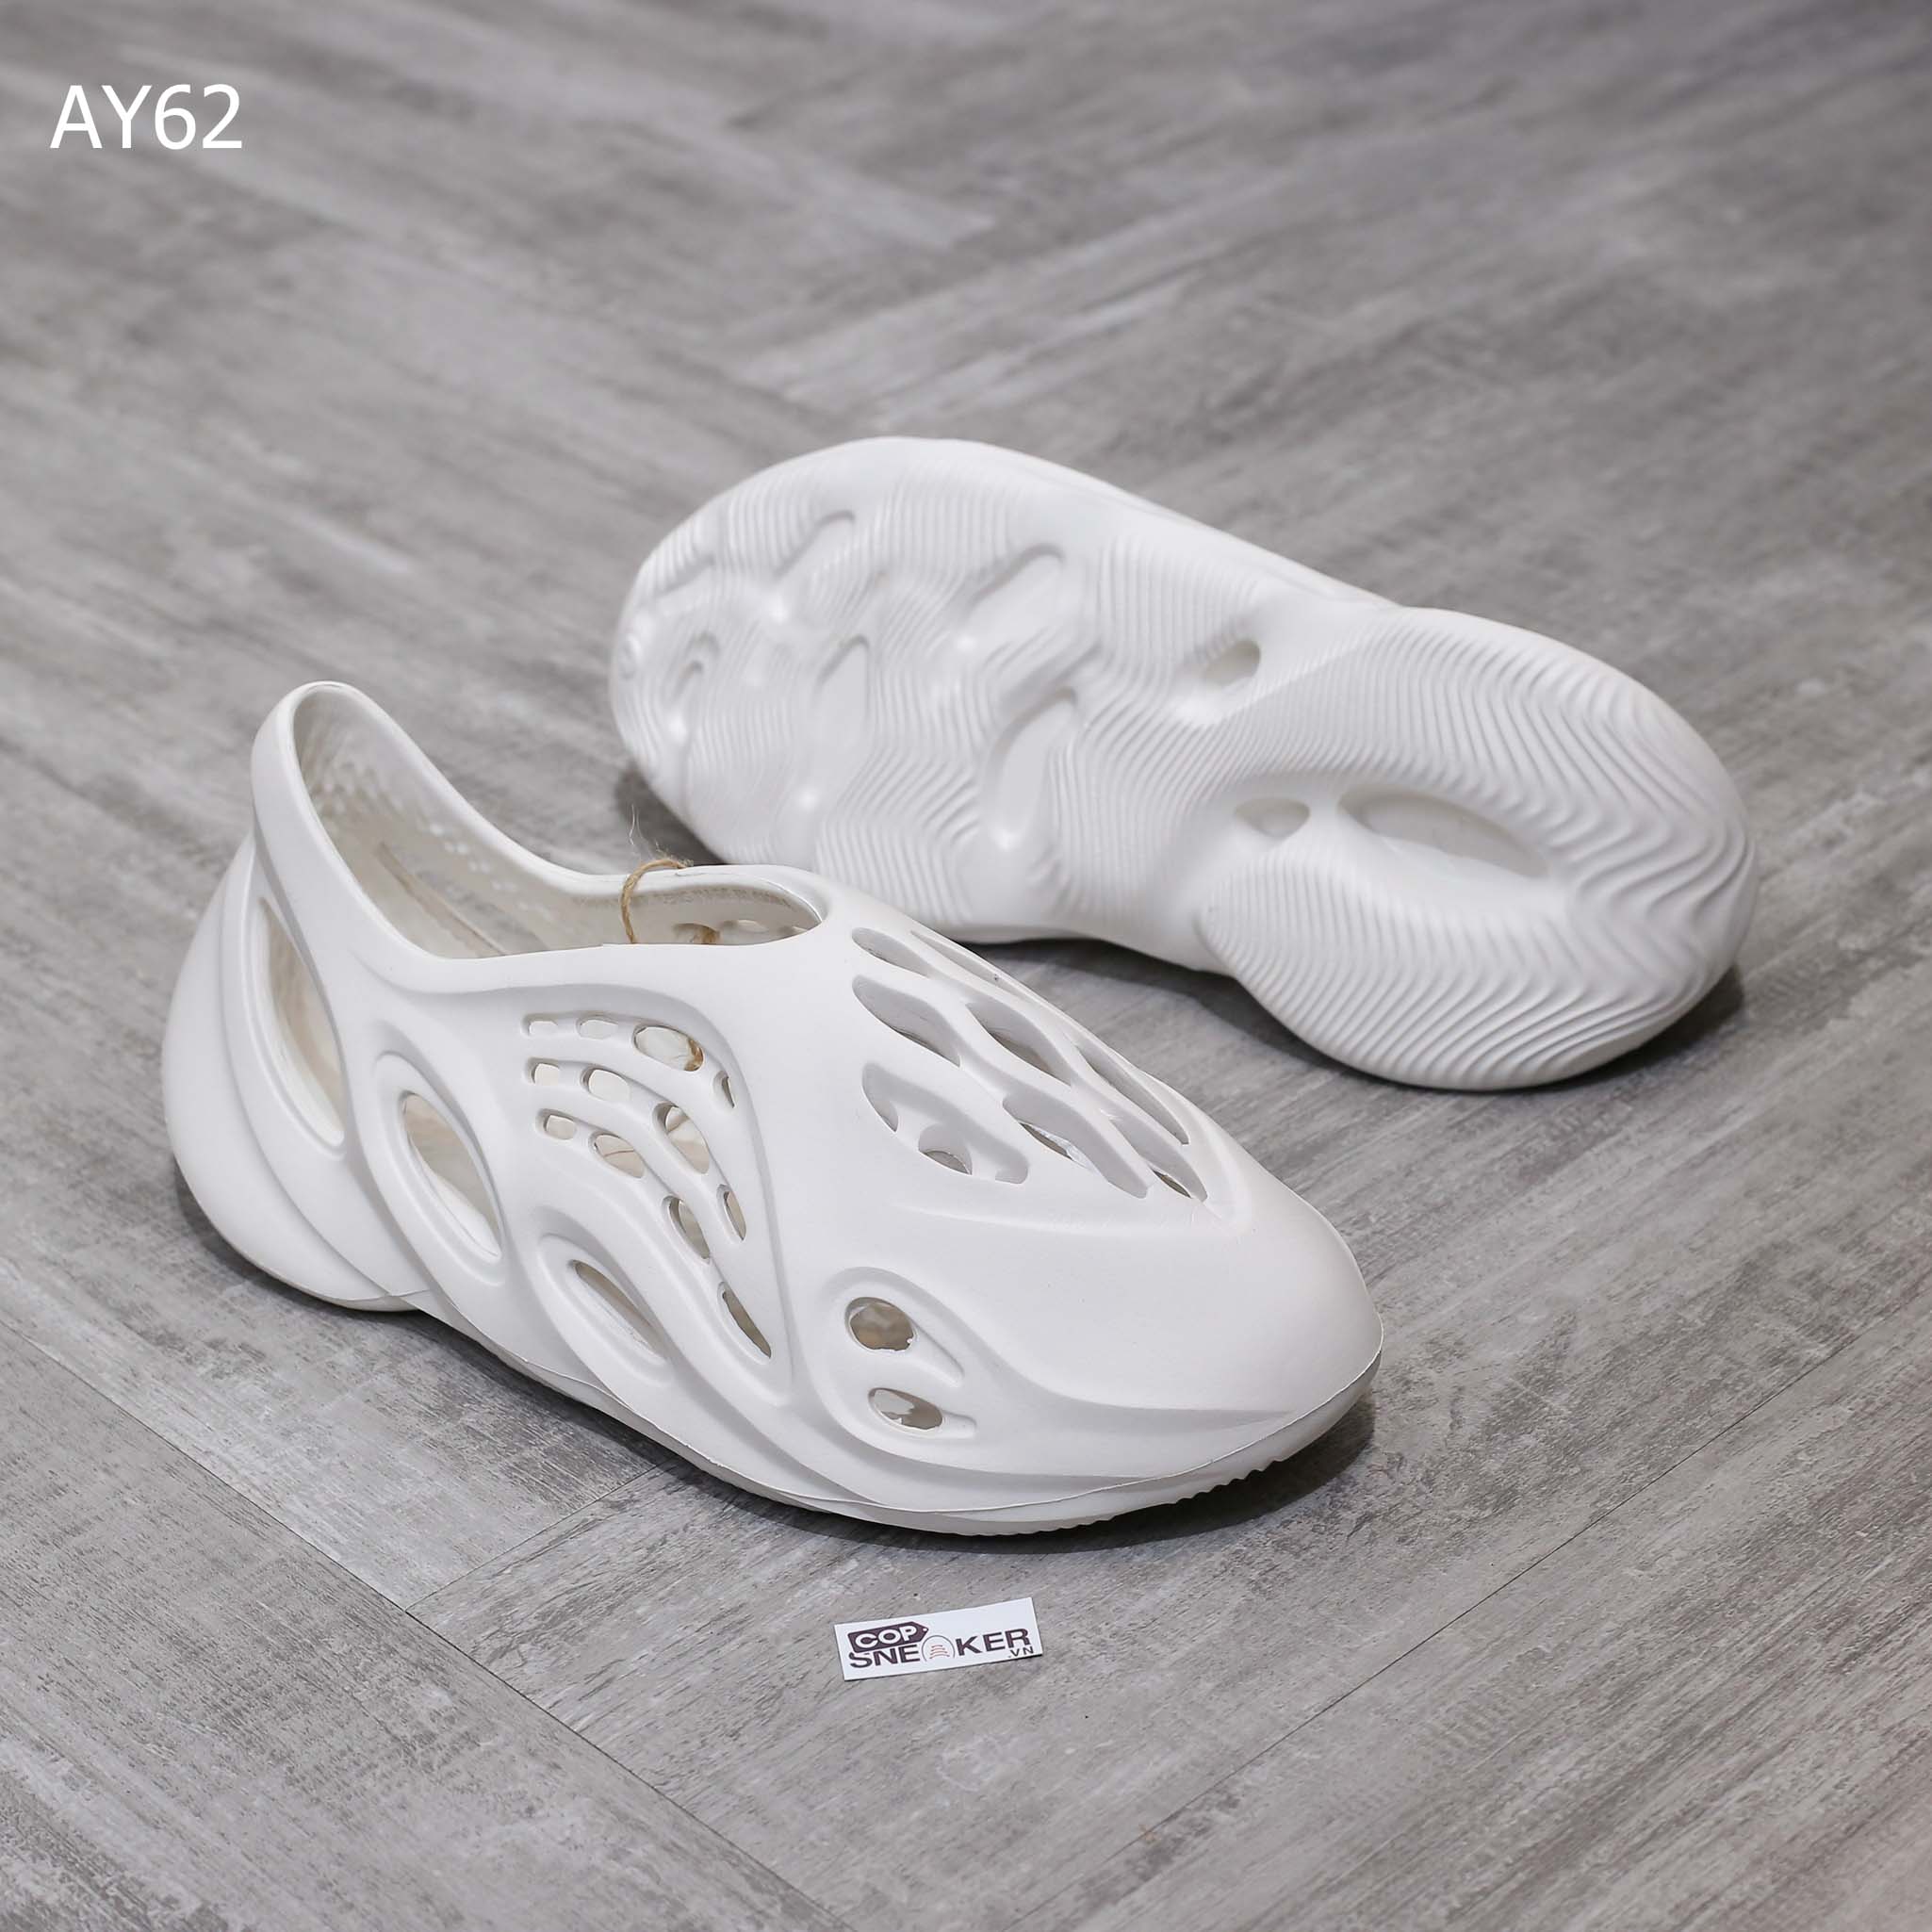 Giày Adidas Yeezy Foam Runner ‘Ararat’ rep 1:1